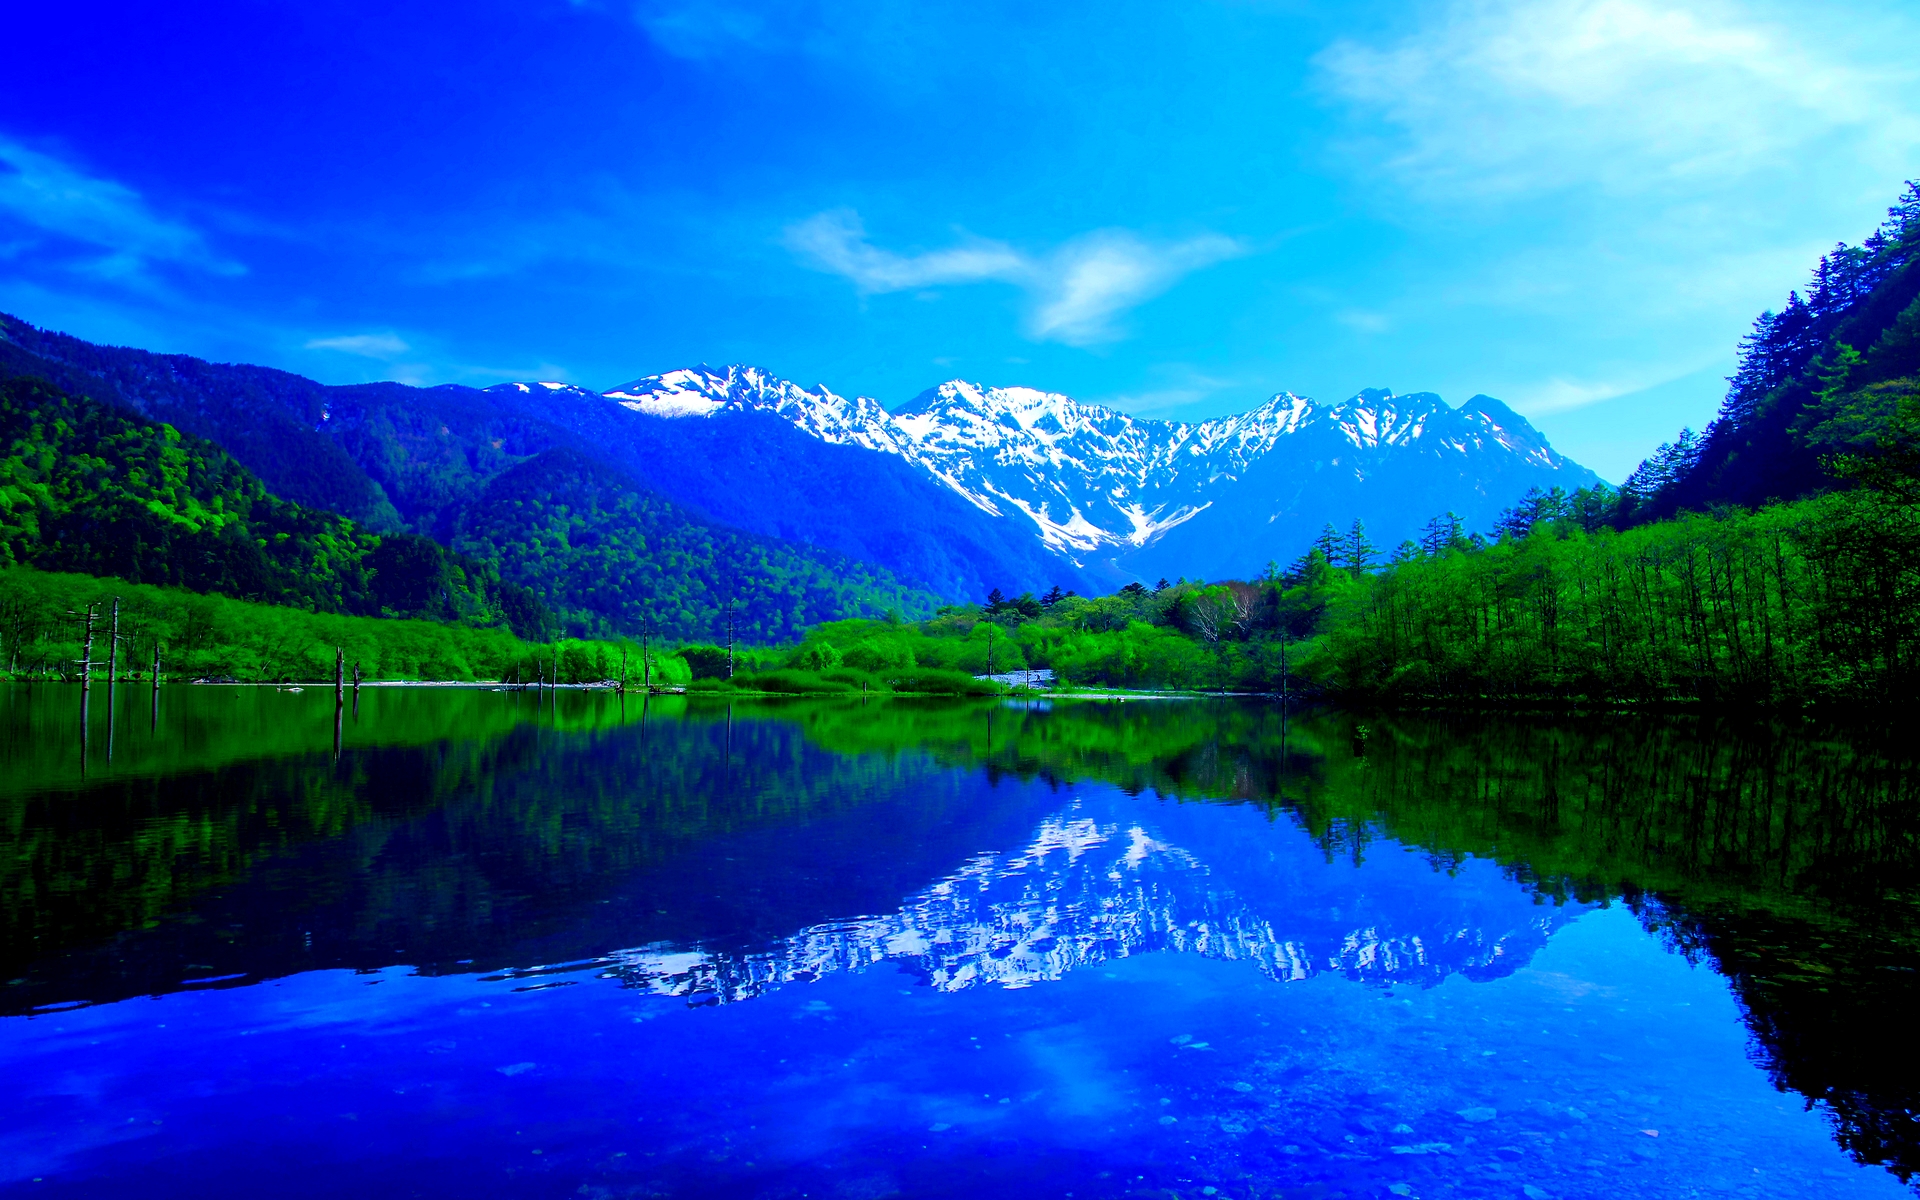 wallpaper pic download,nature,natural landscape,reflection,blue,sky